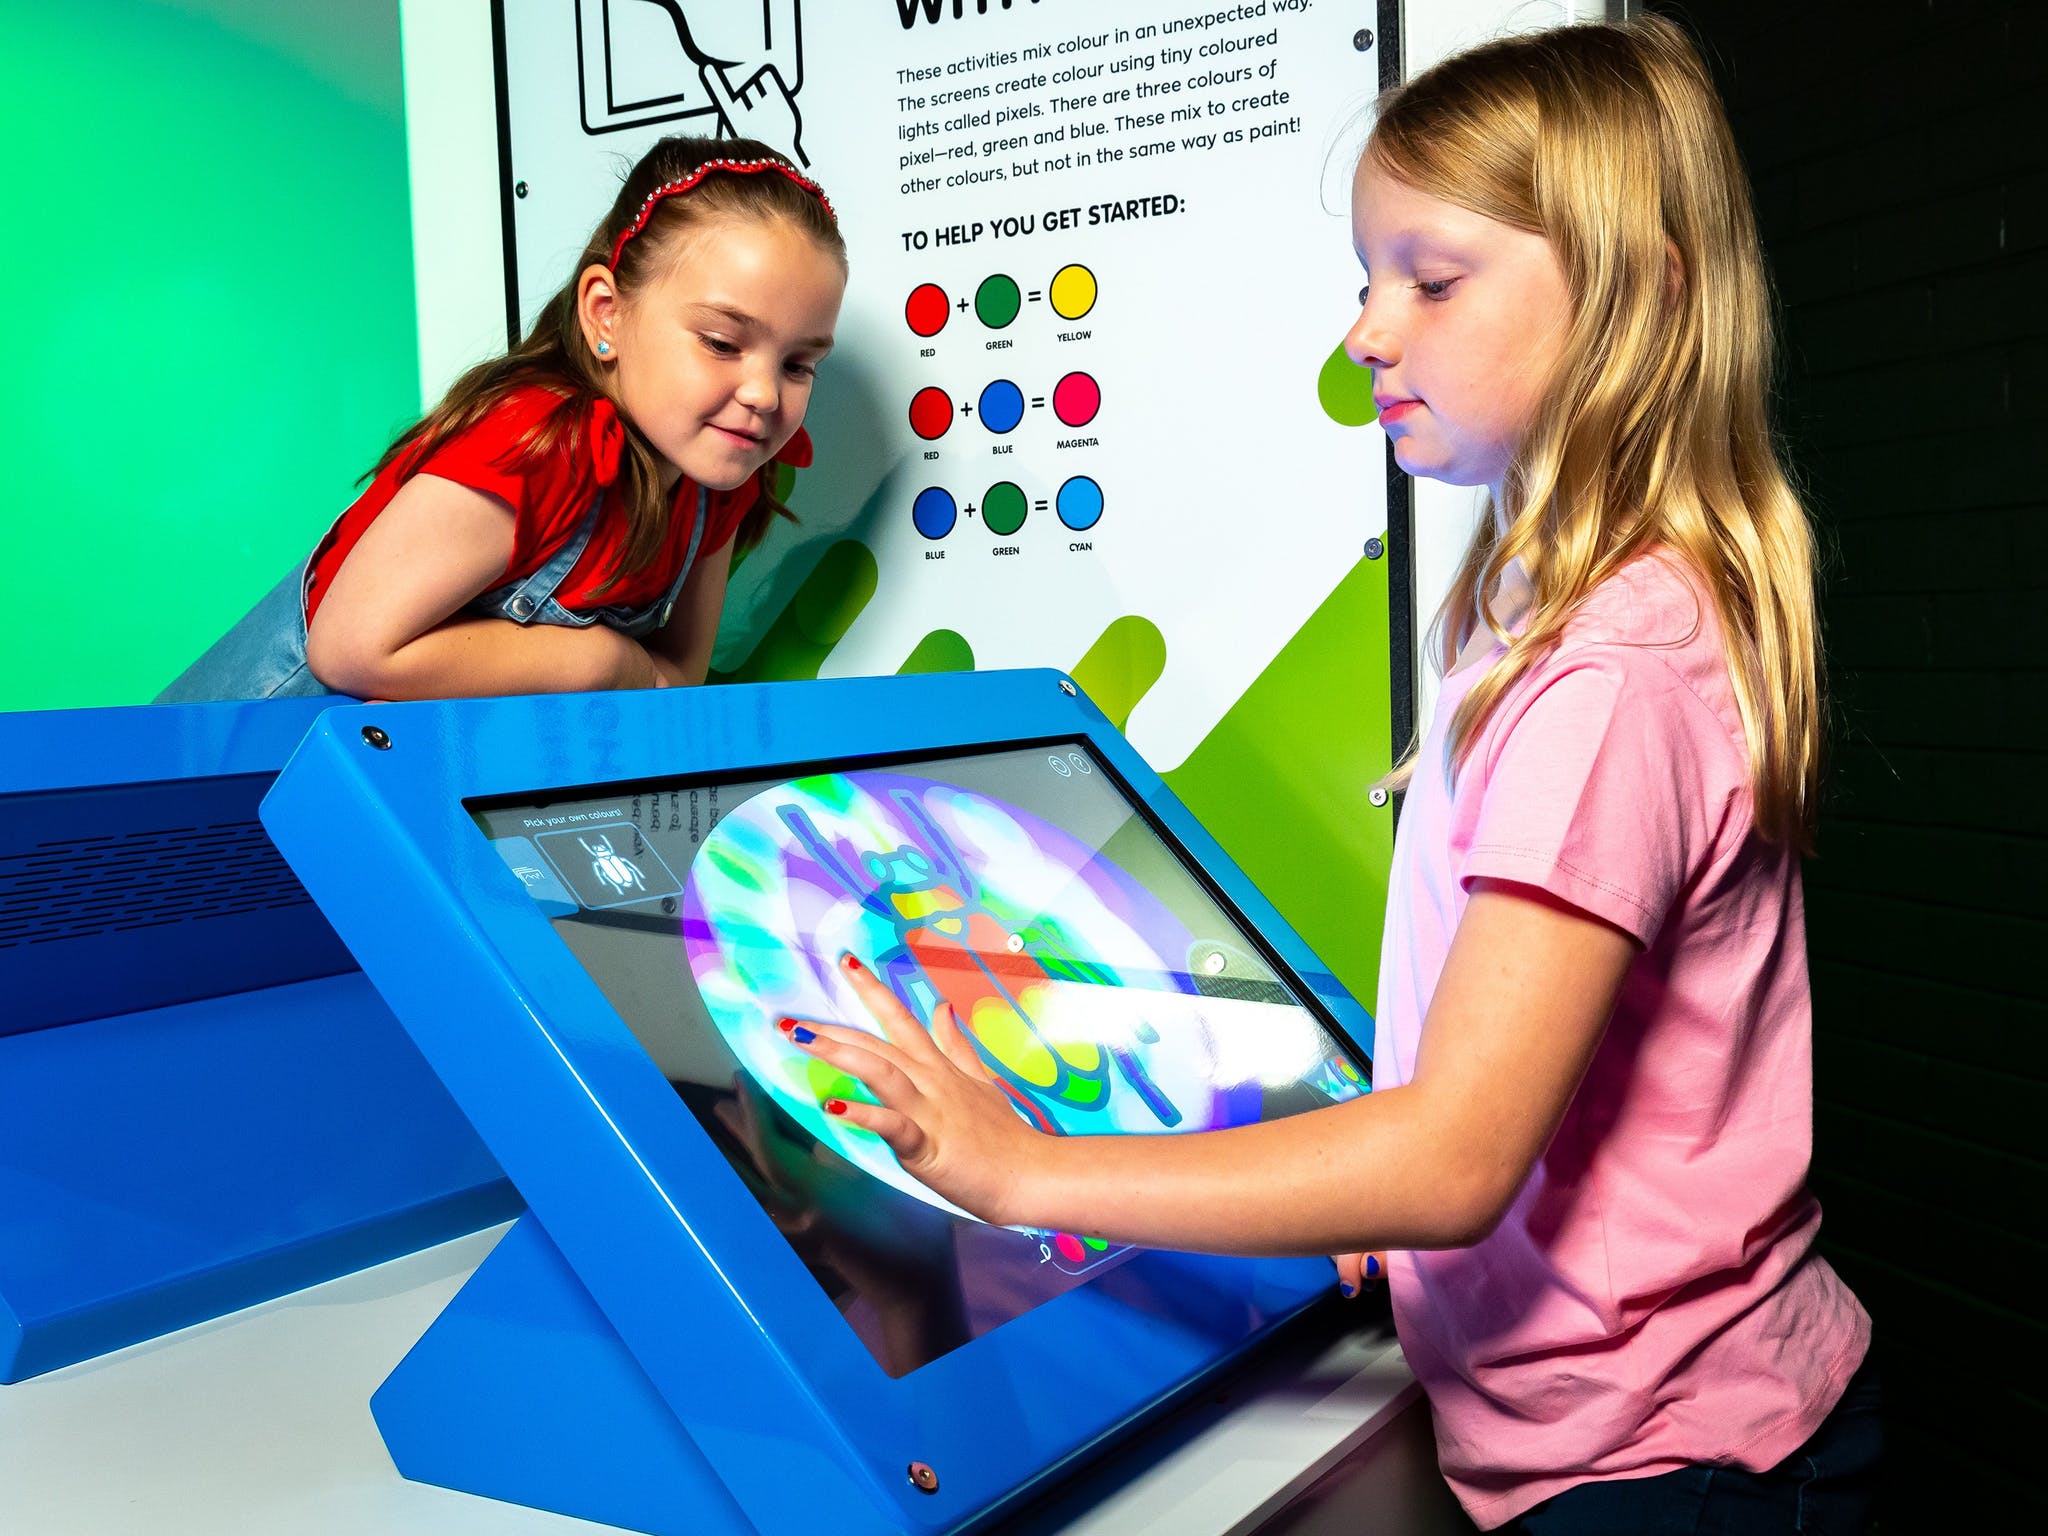 A girl mixes virtual colours on an electronic touch screen in the an exhibit kiosk